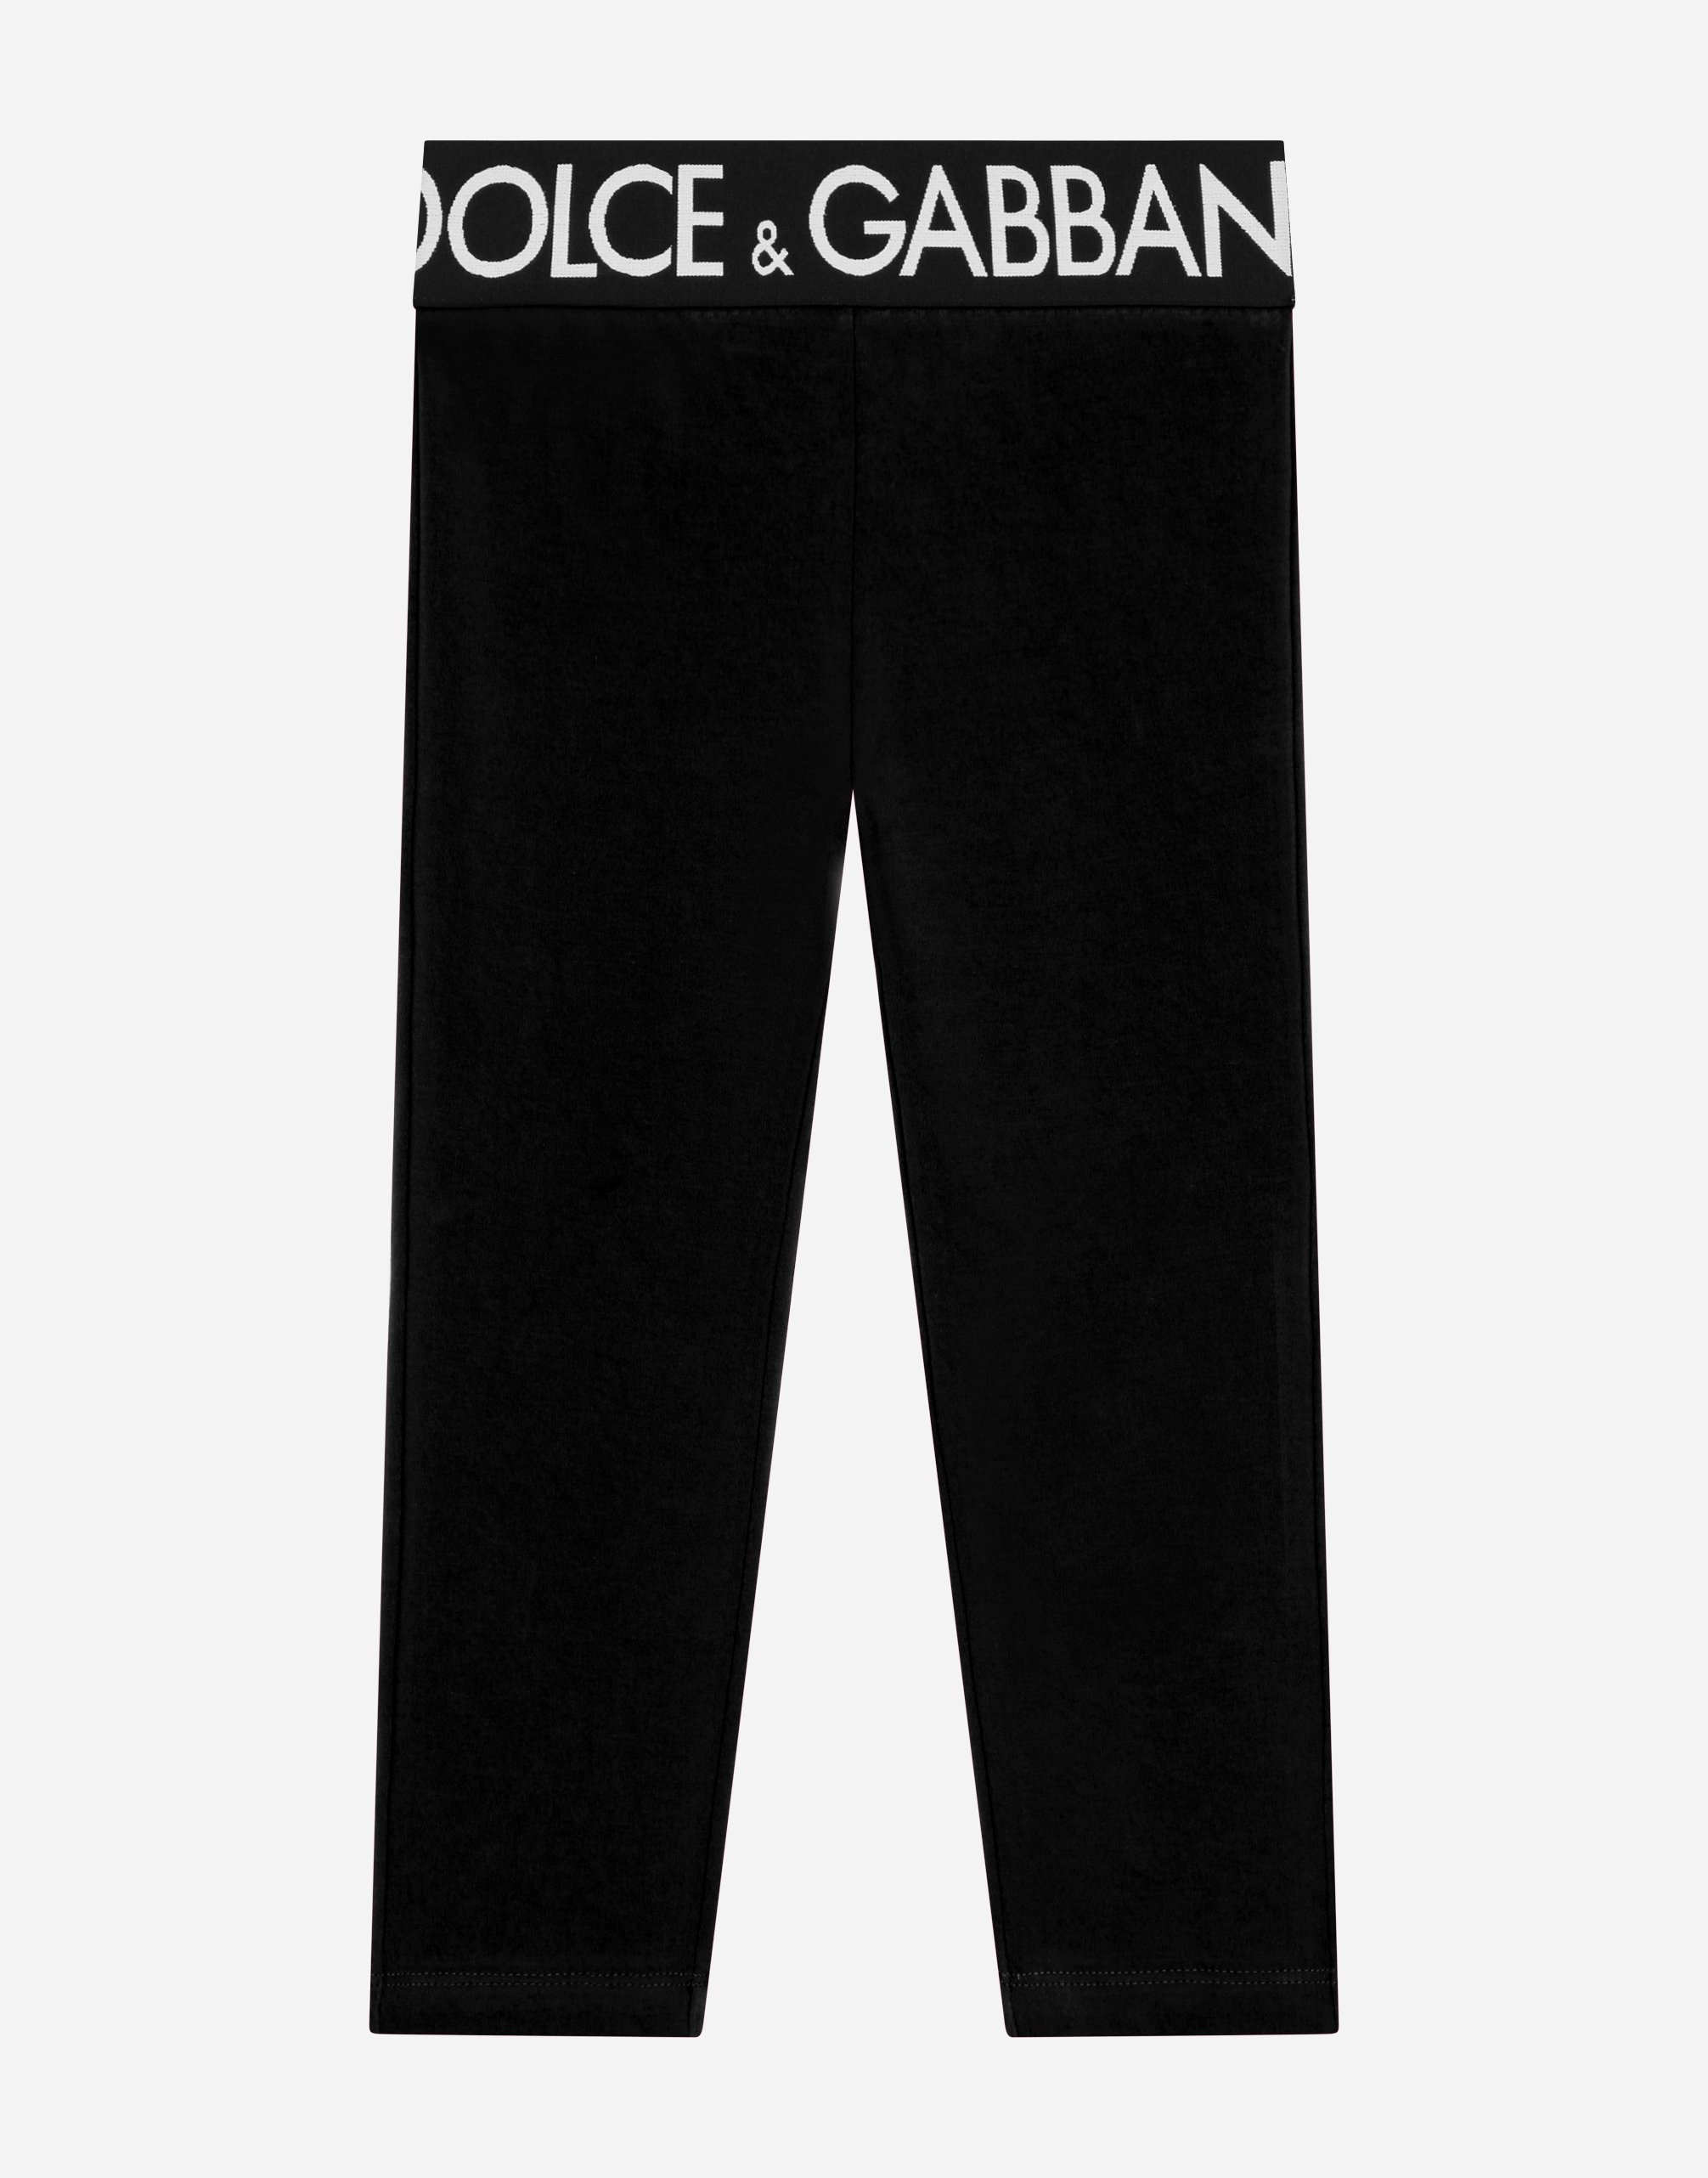 Dolce & Gabbana Kids' Interlock Leggings With Branded Elastic In Black